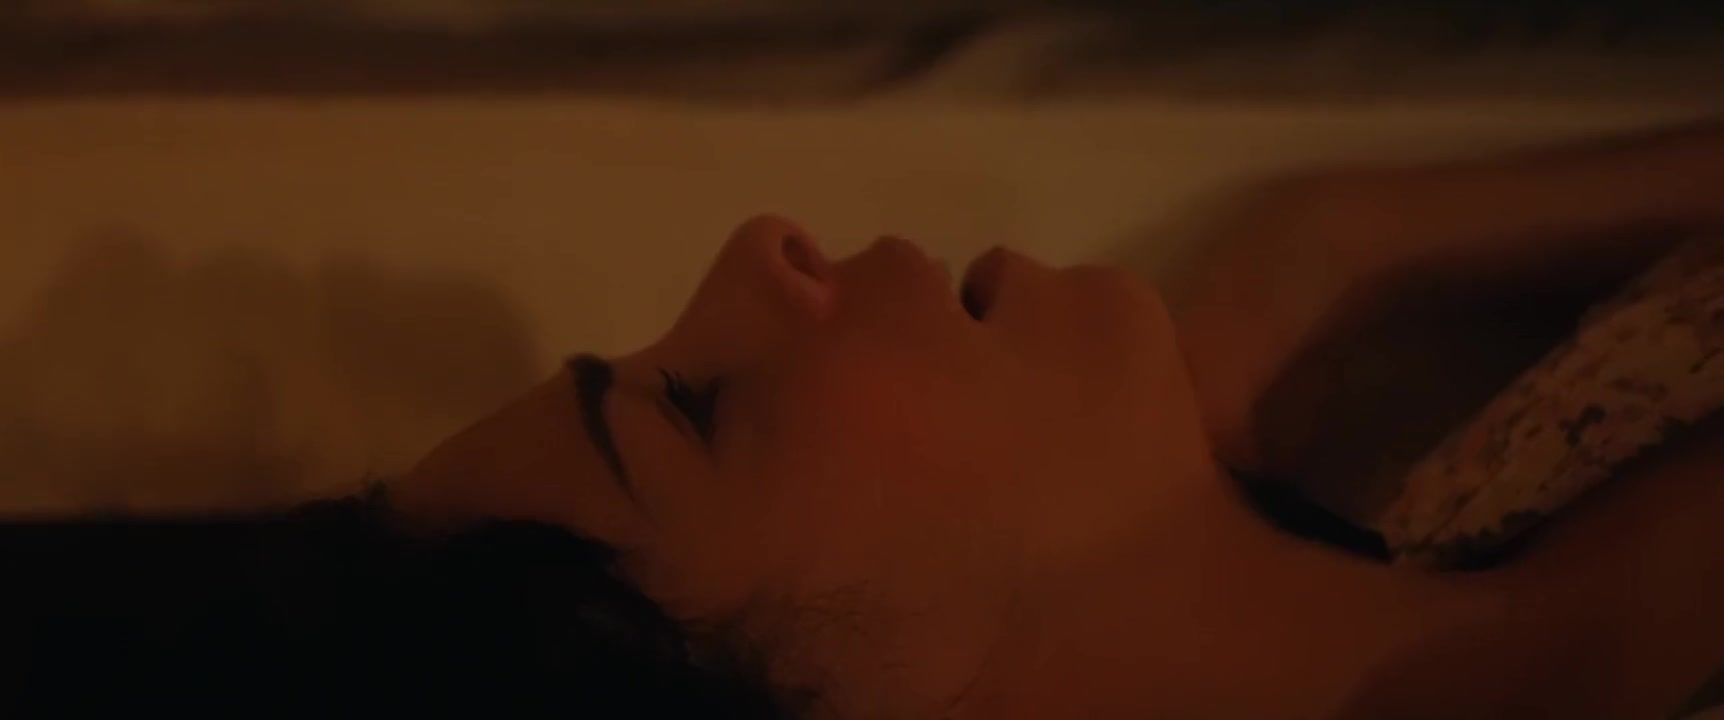 Groupsex Sex video Sarah Silverman - I Smile back (2015) Bigbutt - 1